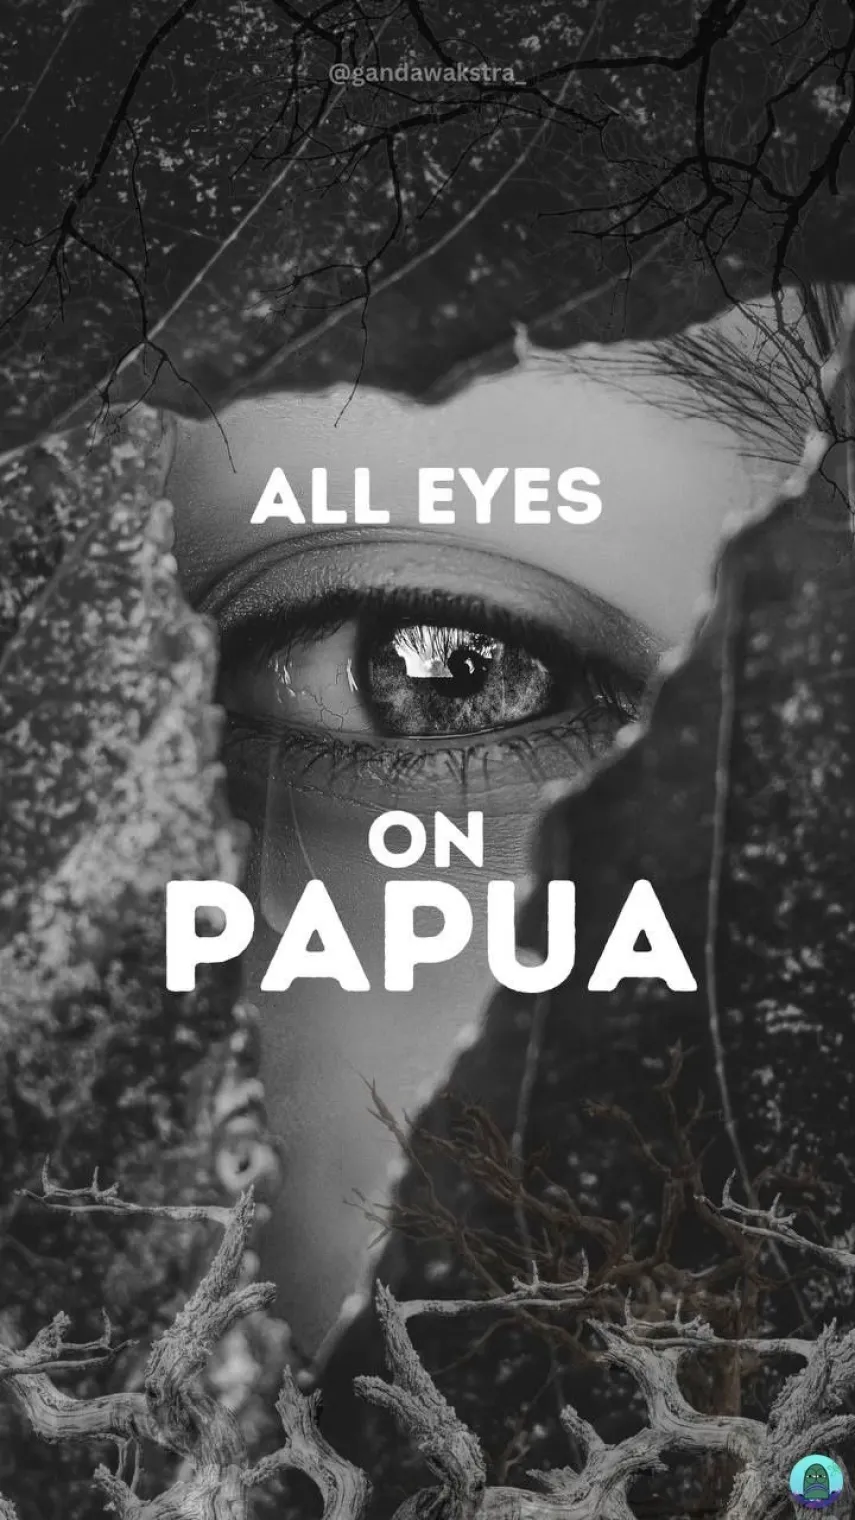 Polemik Baru! Ini Arti Slogan “All Eyes On Papua” yang Viral di Media Sosial 